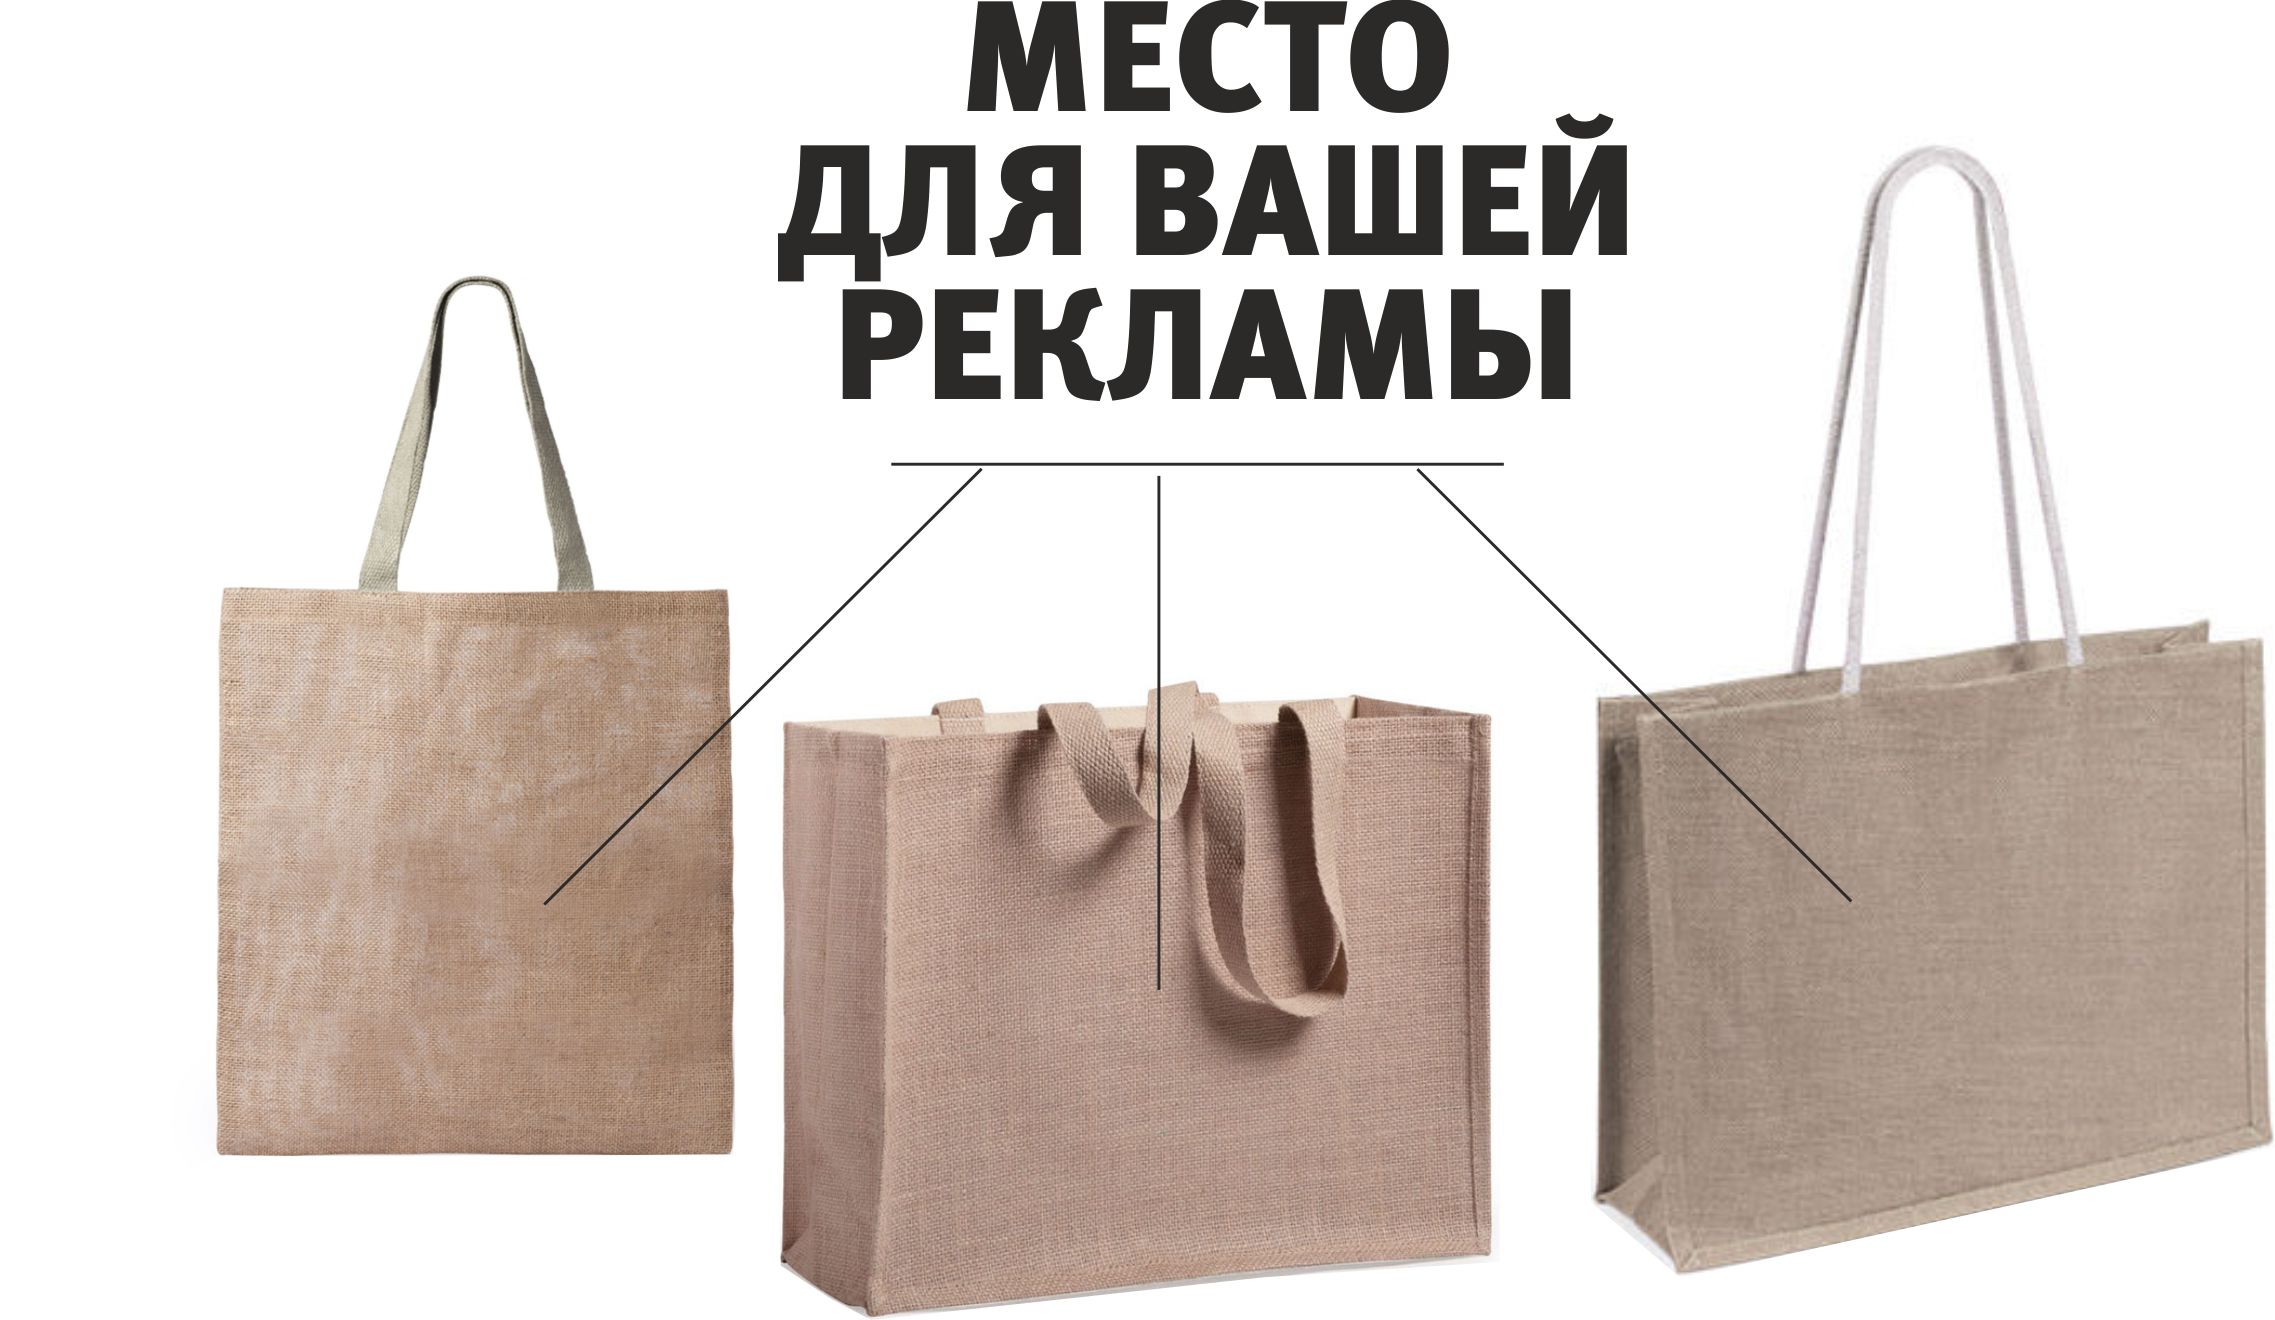 сумки из джута с логотипом в Москве